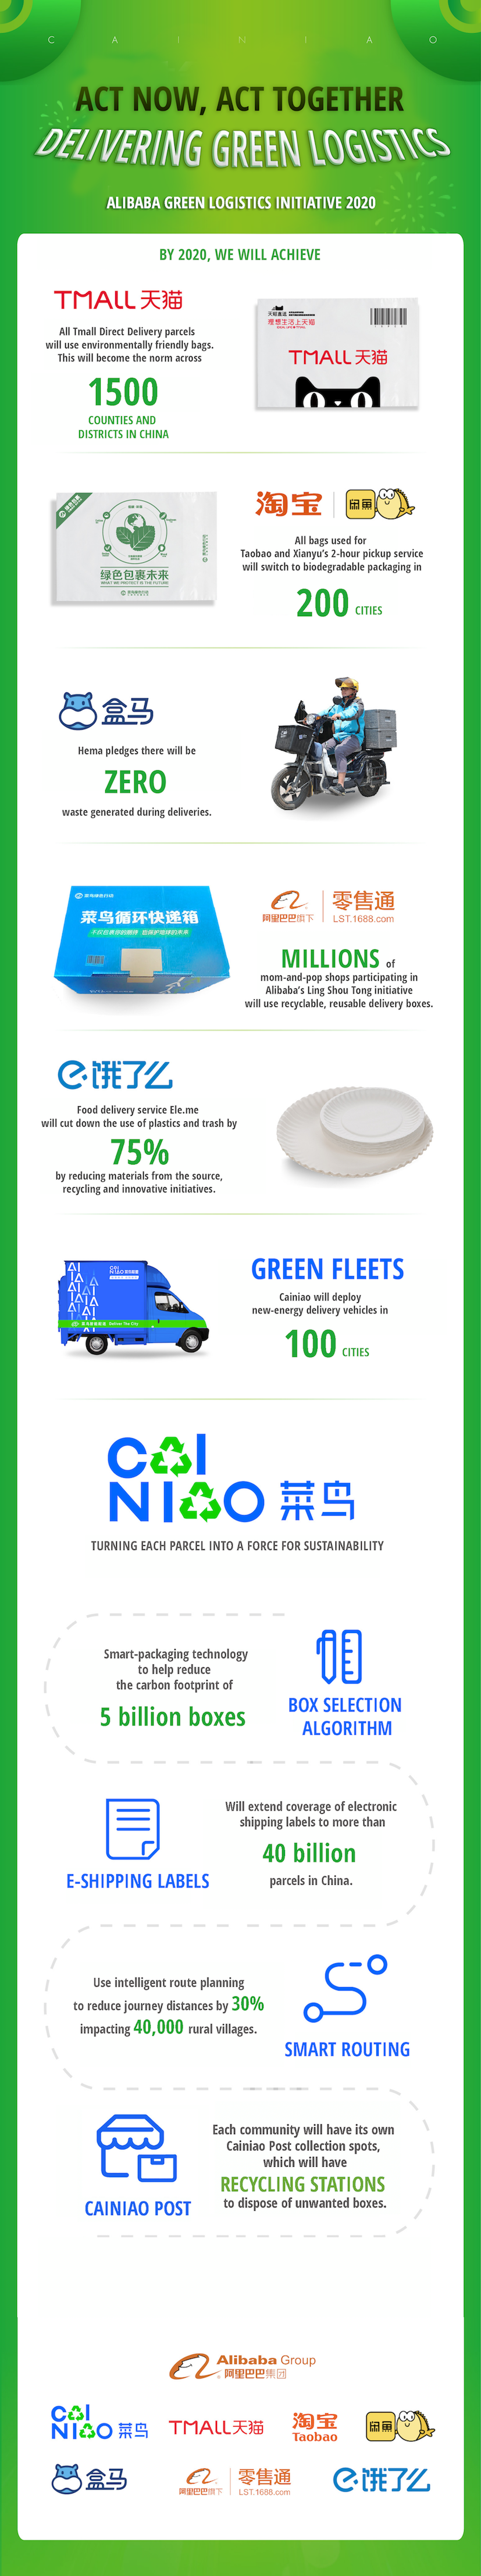 Cainiao green logistics